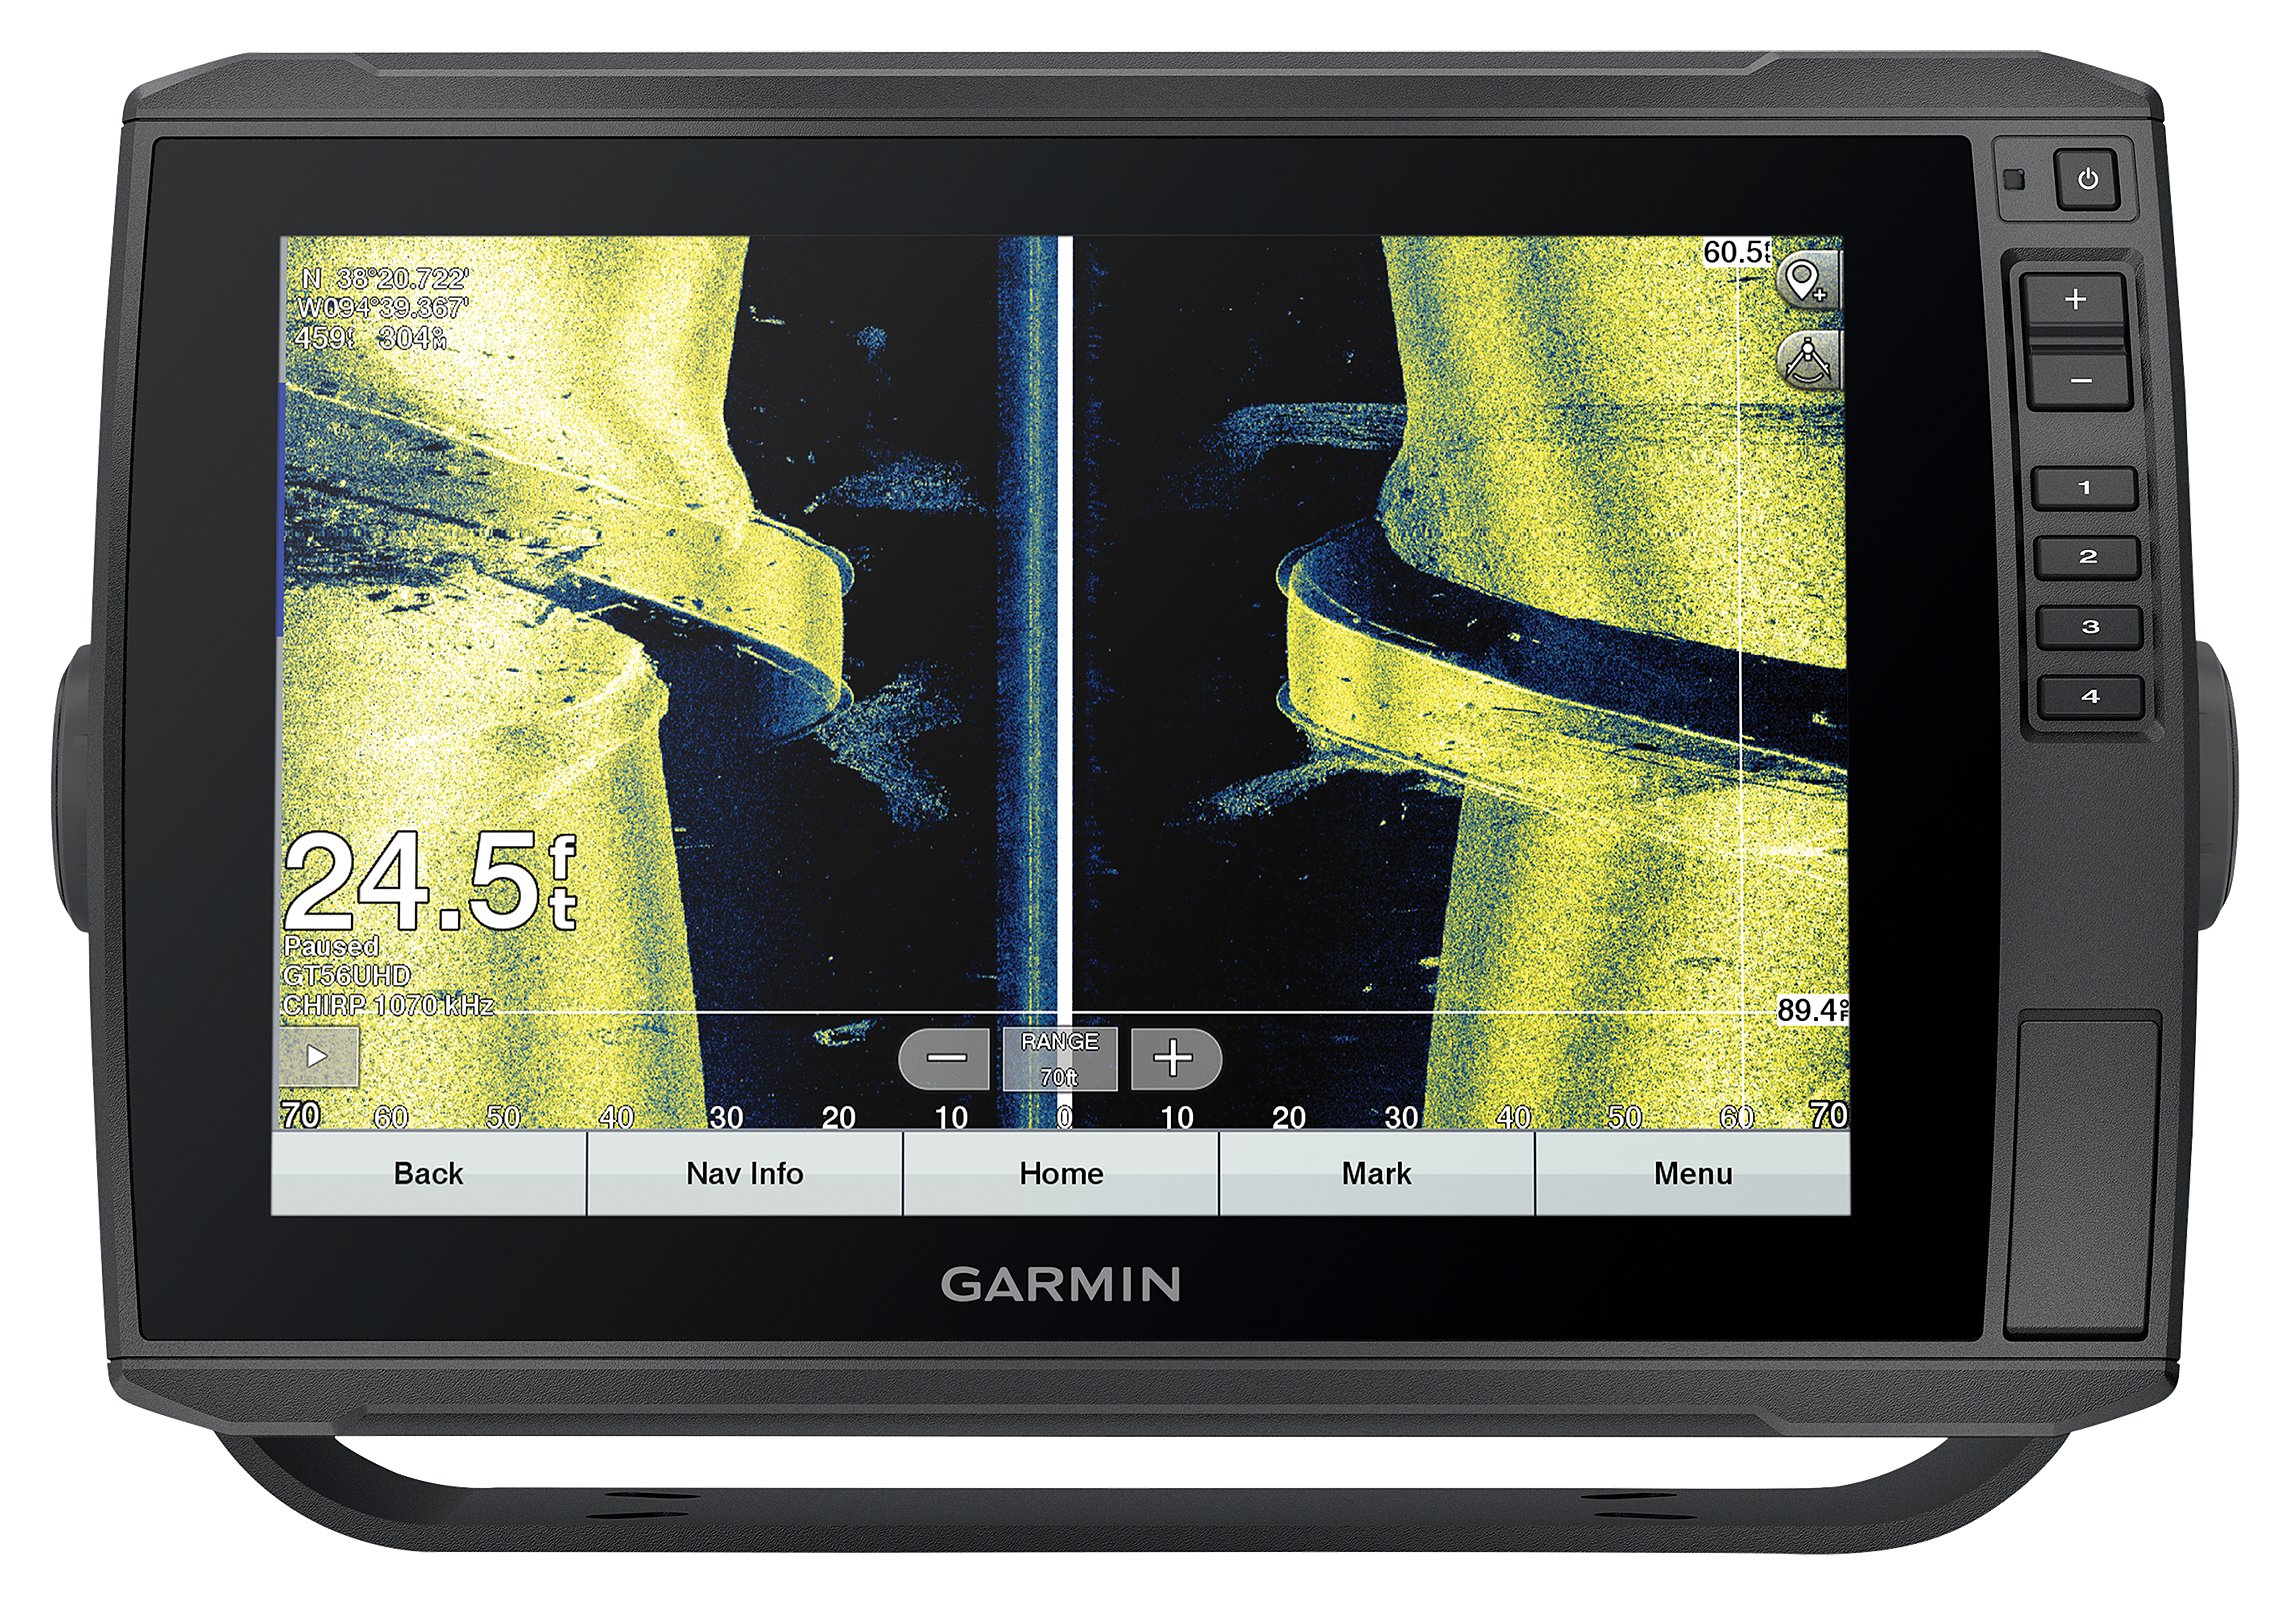 Garmin Livescope Plus LVS34 review - Shotgun Marine Services